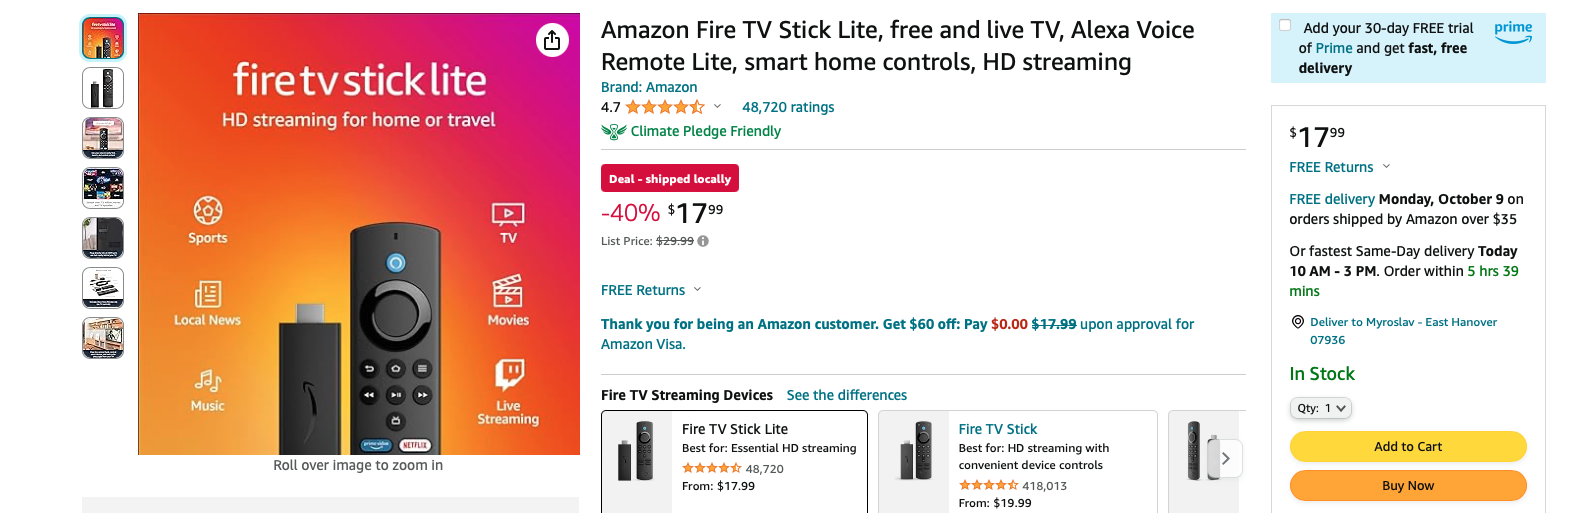 Fire TV Stick Lite with latest Alexa Voice Remote